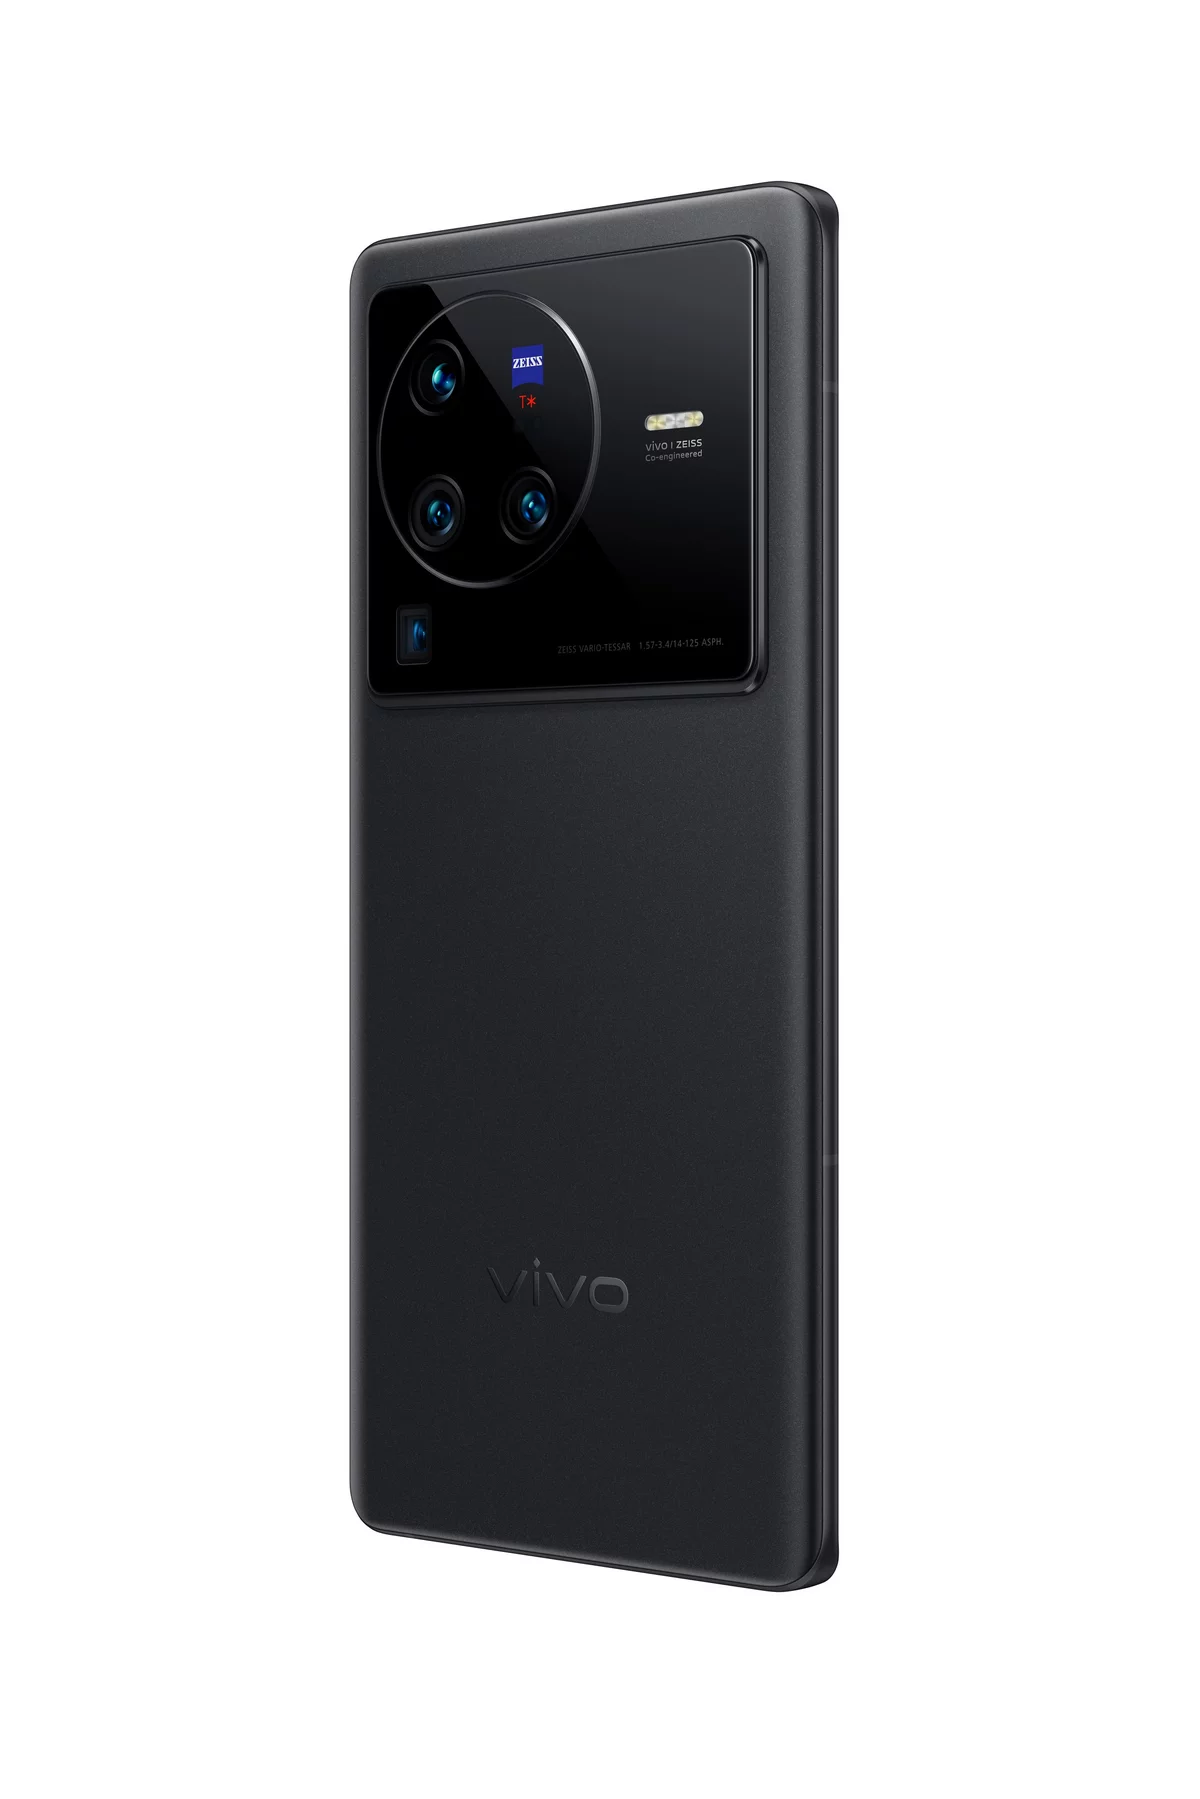 Vivo X80 Pro bị cấm vận © vivo